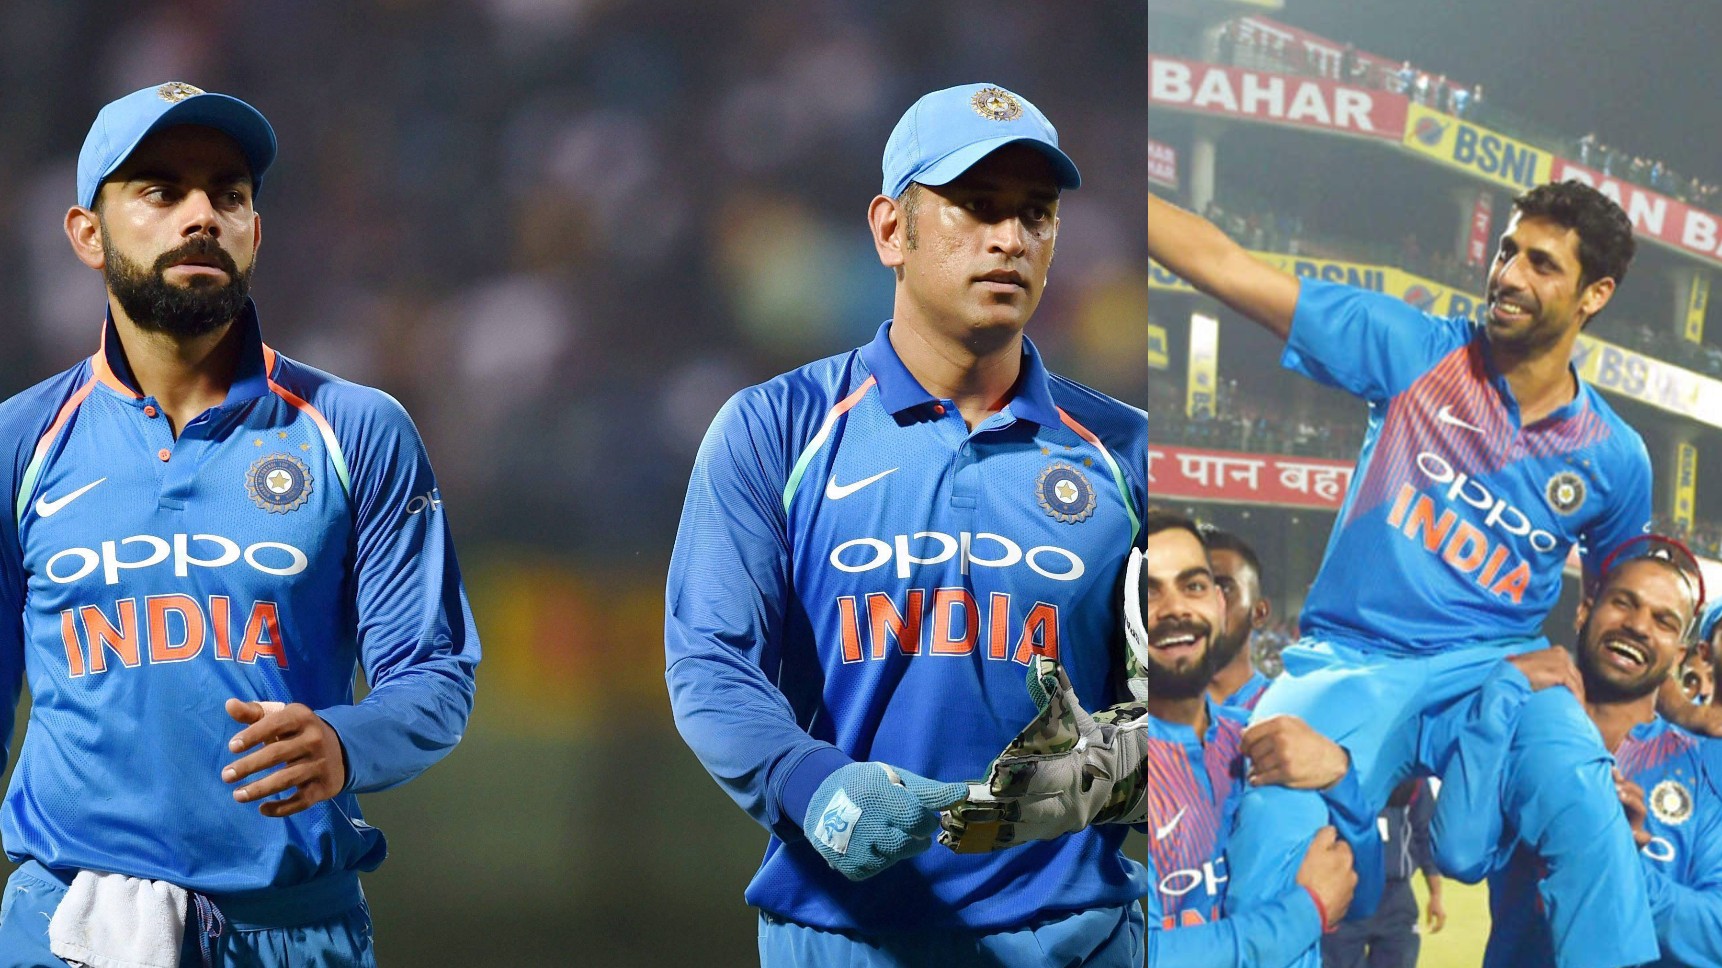 Ashish Nehra compares captaincy styles of Dhoni and Kohli; calls Kohli a 'work in progress' as captain